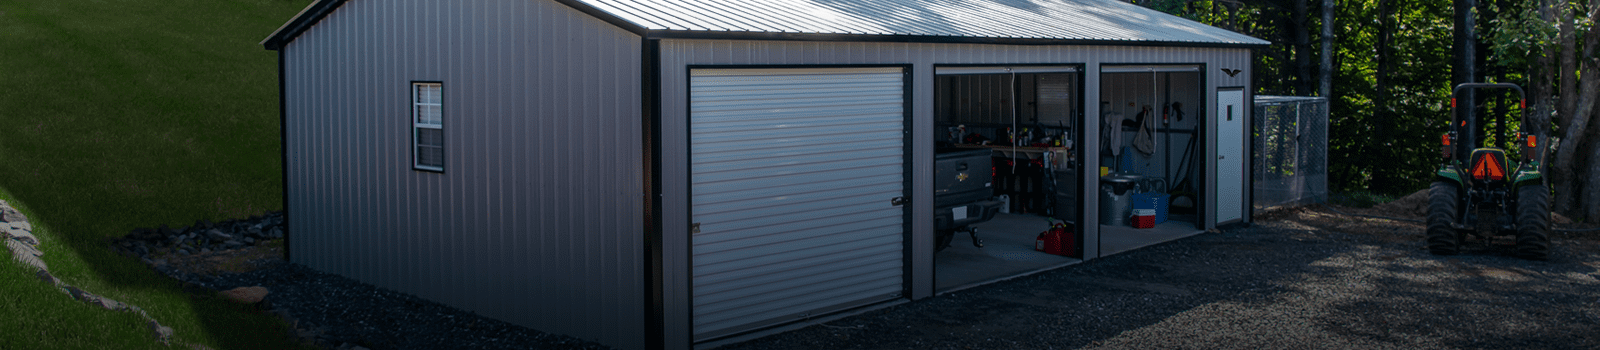 3 bay Metal Garage Metal Barn Garage Steel Building Shed for Sale